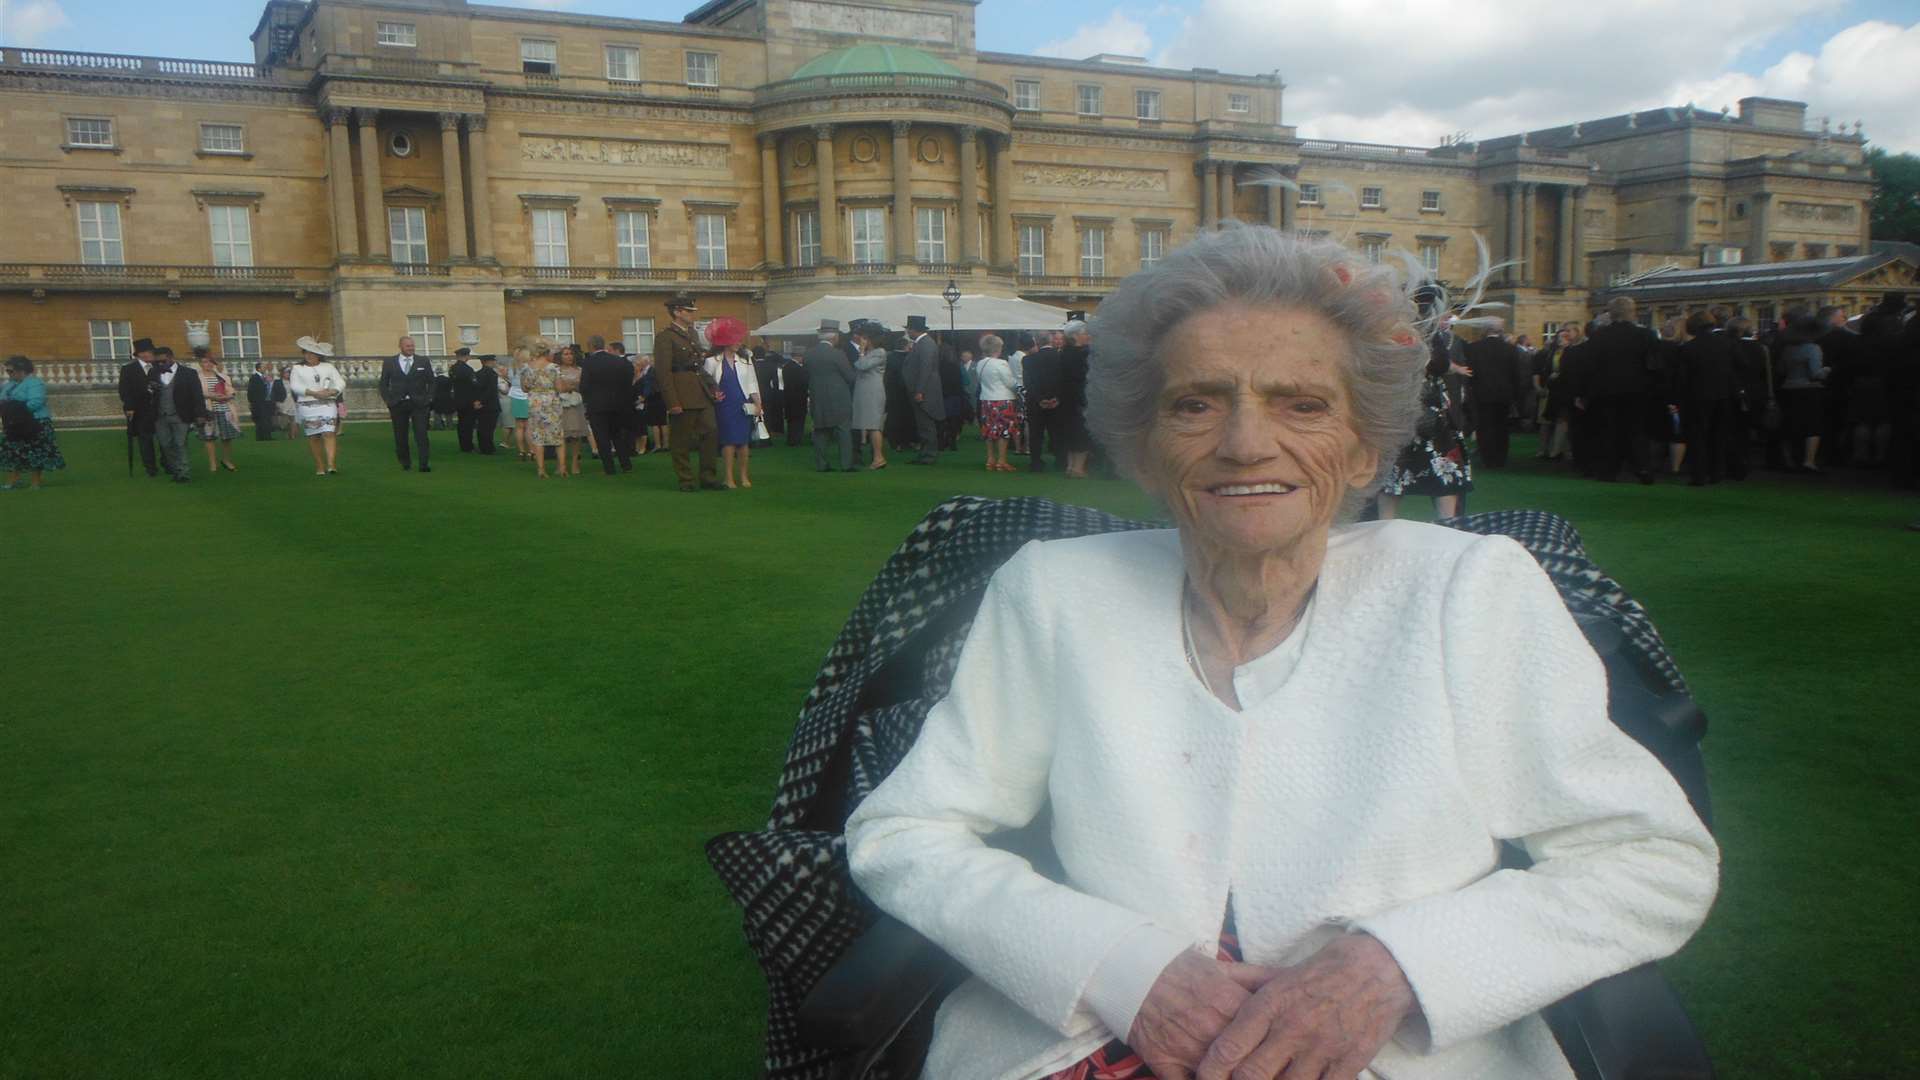 Doris Daniels enjoying her day at Buckingham Palace